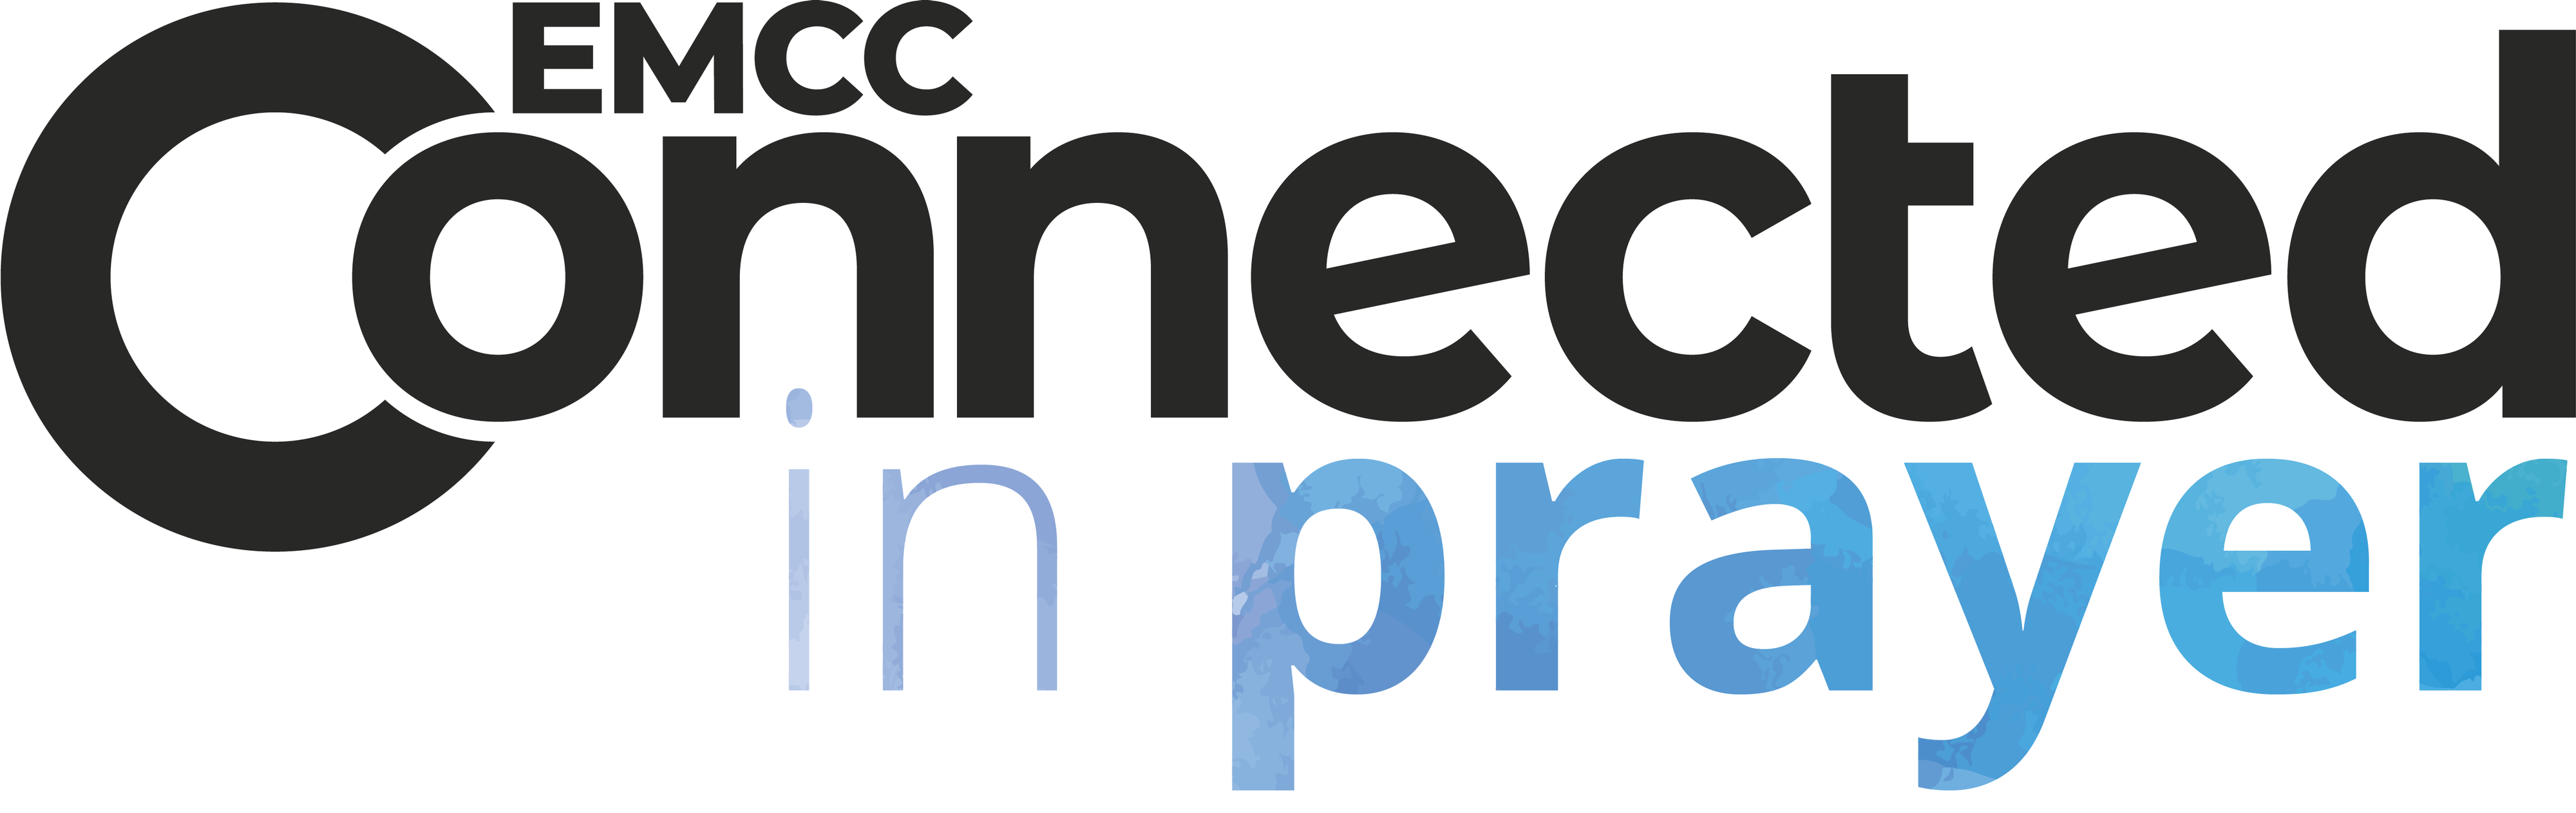 EMCC Connected in prayer